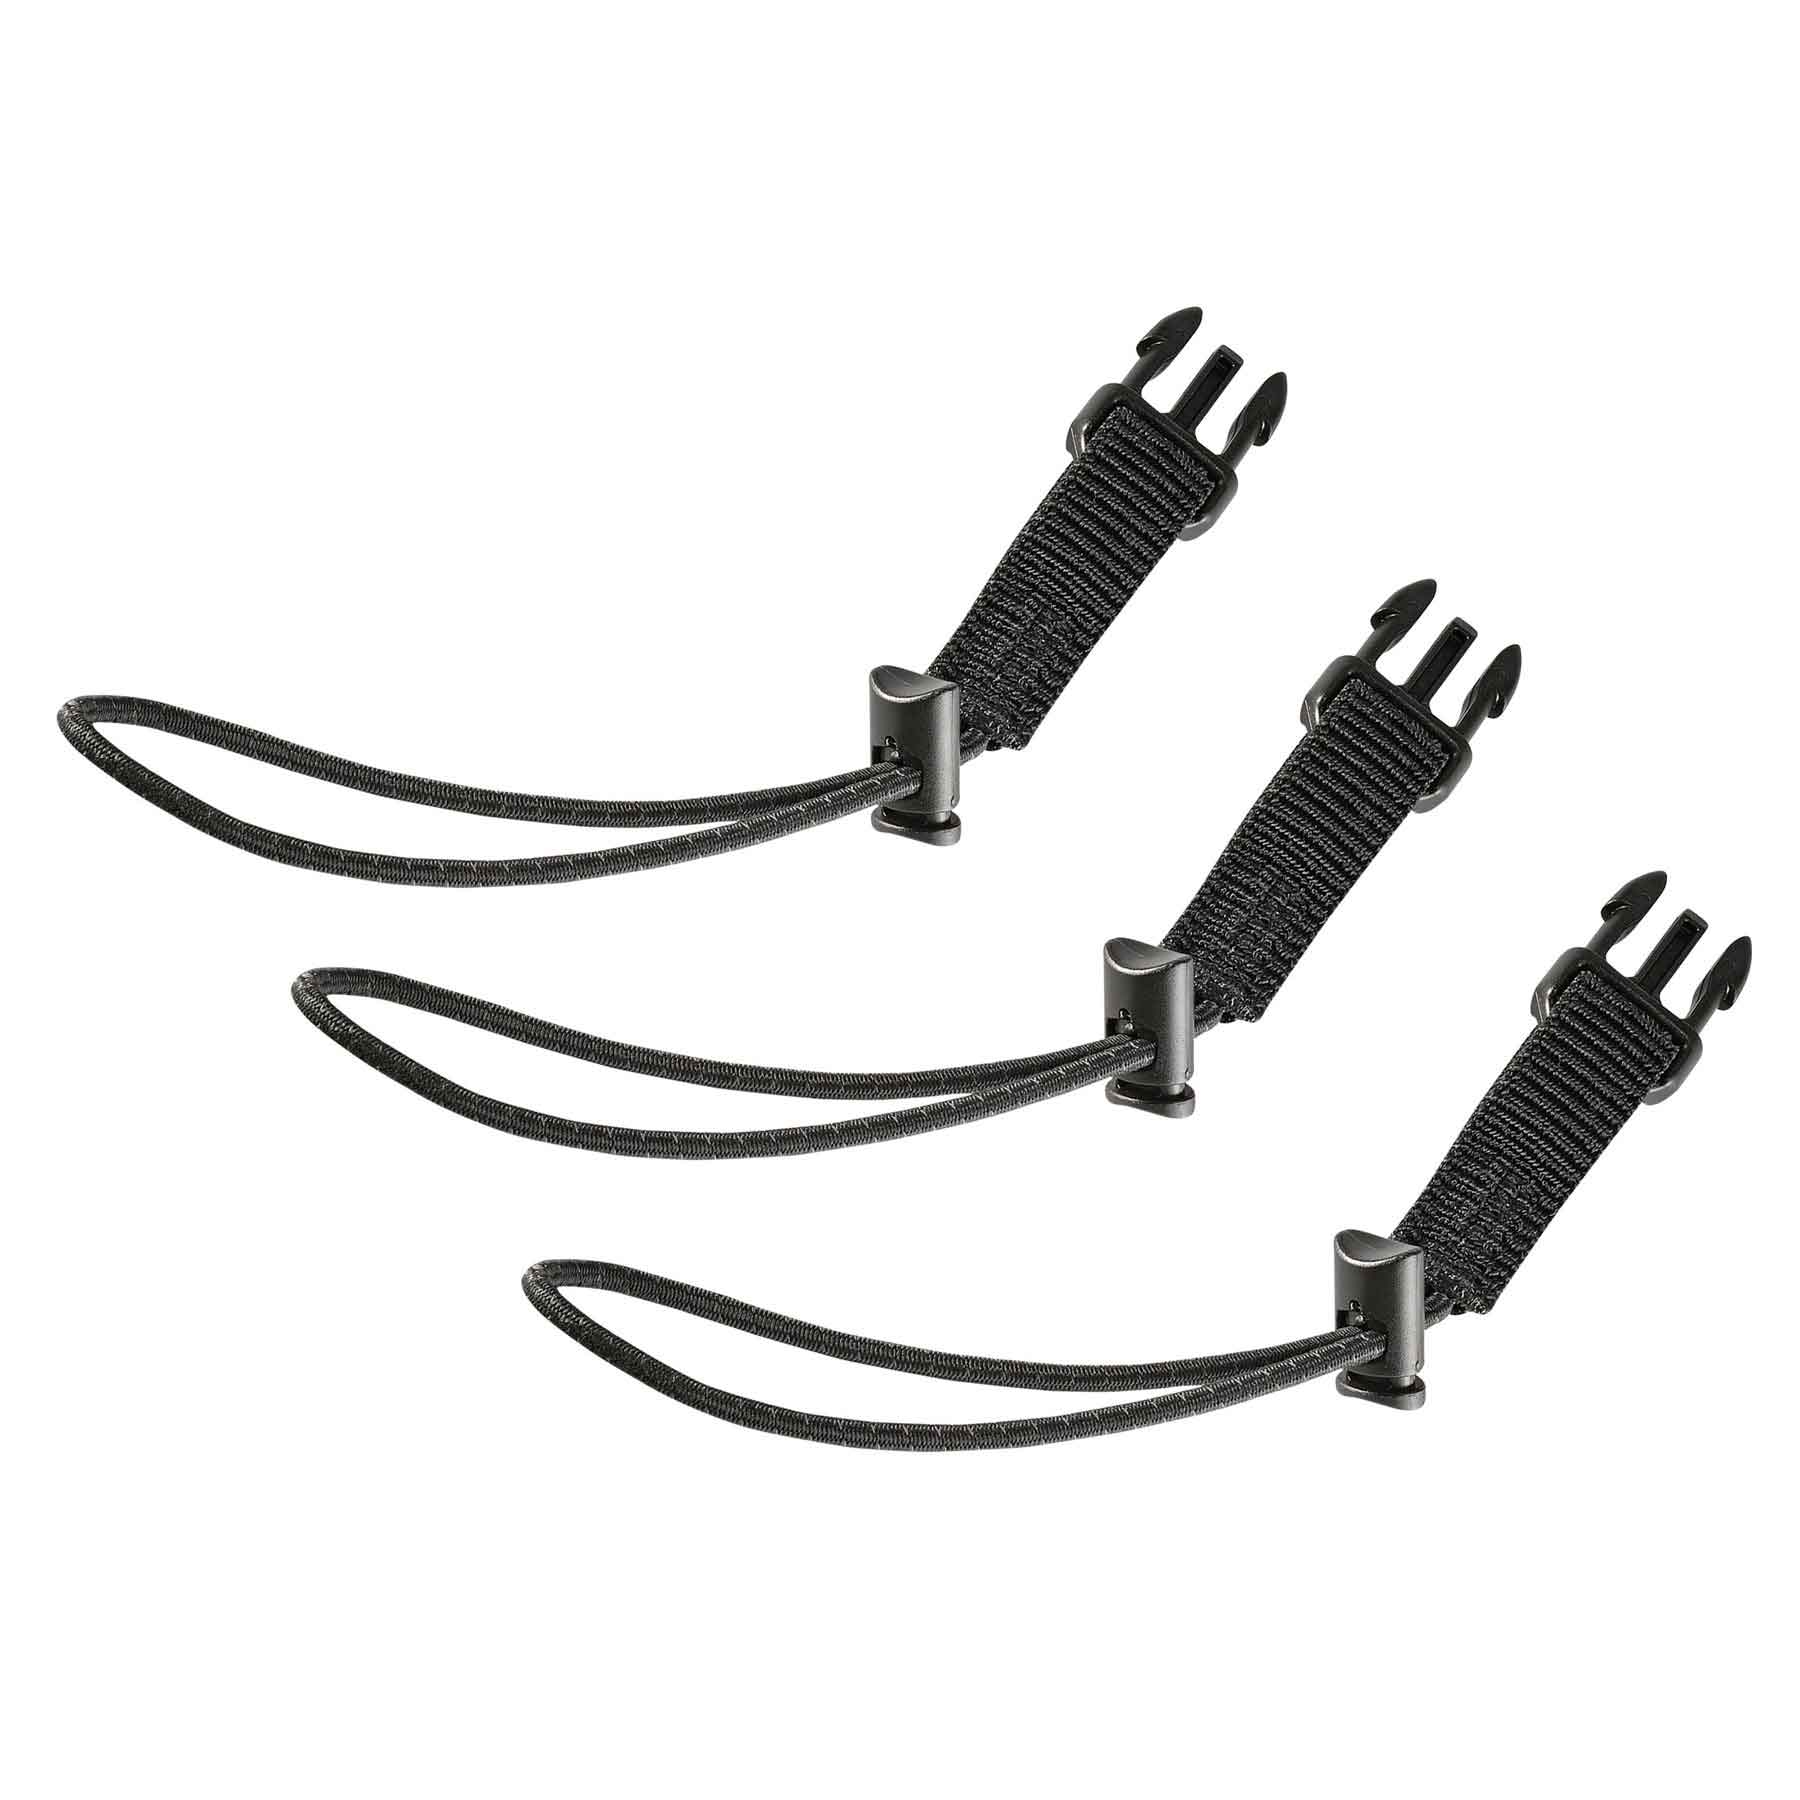 Clear Elastic Cable Restraints (20 pack) - ExplorAudio